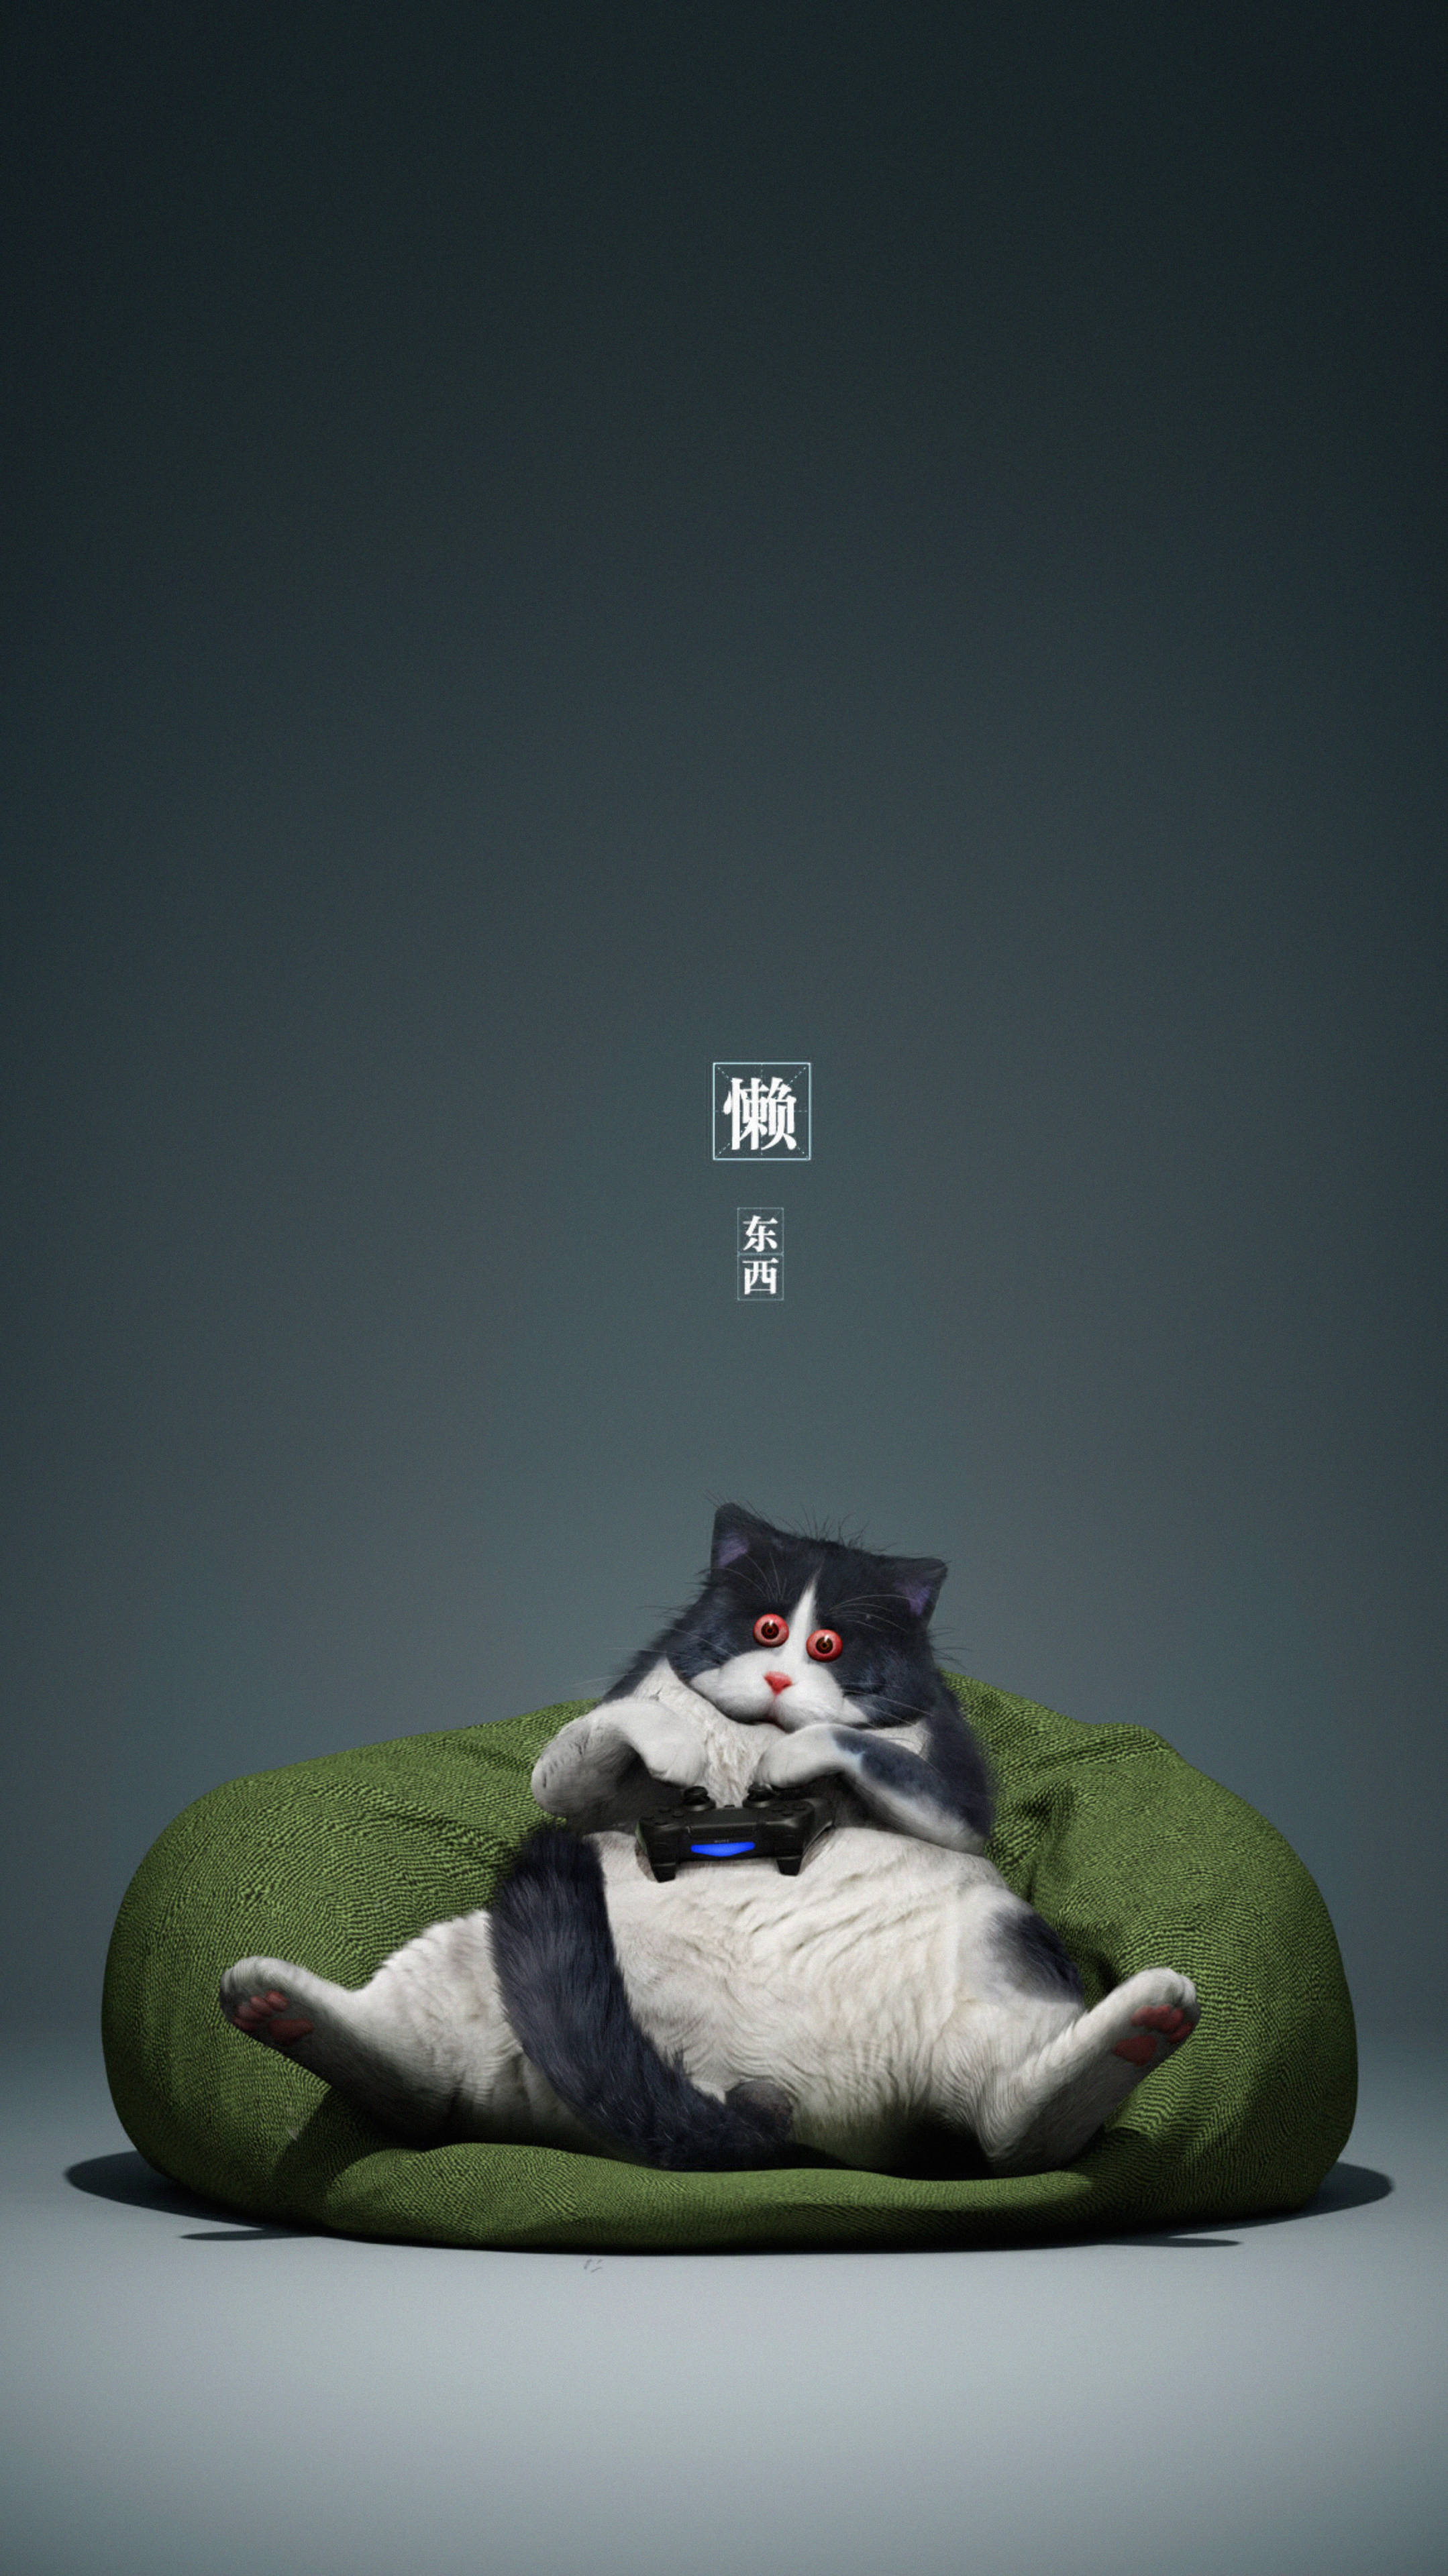 Download Cool Lazy Cat Wallpaper